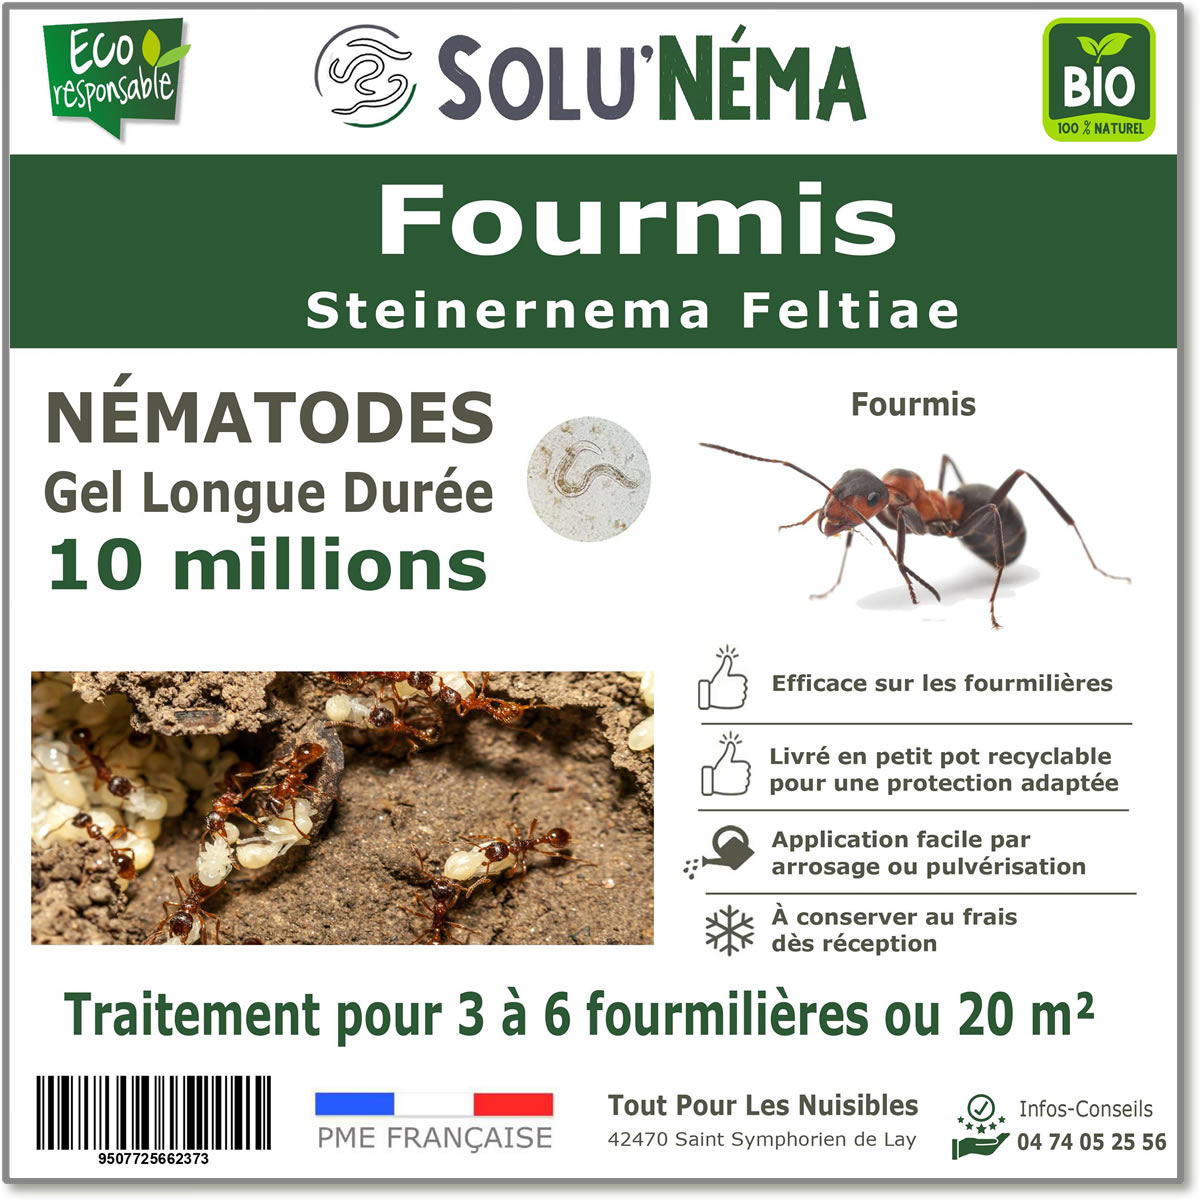 Nematodes ant treatment 10 million